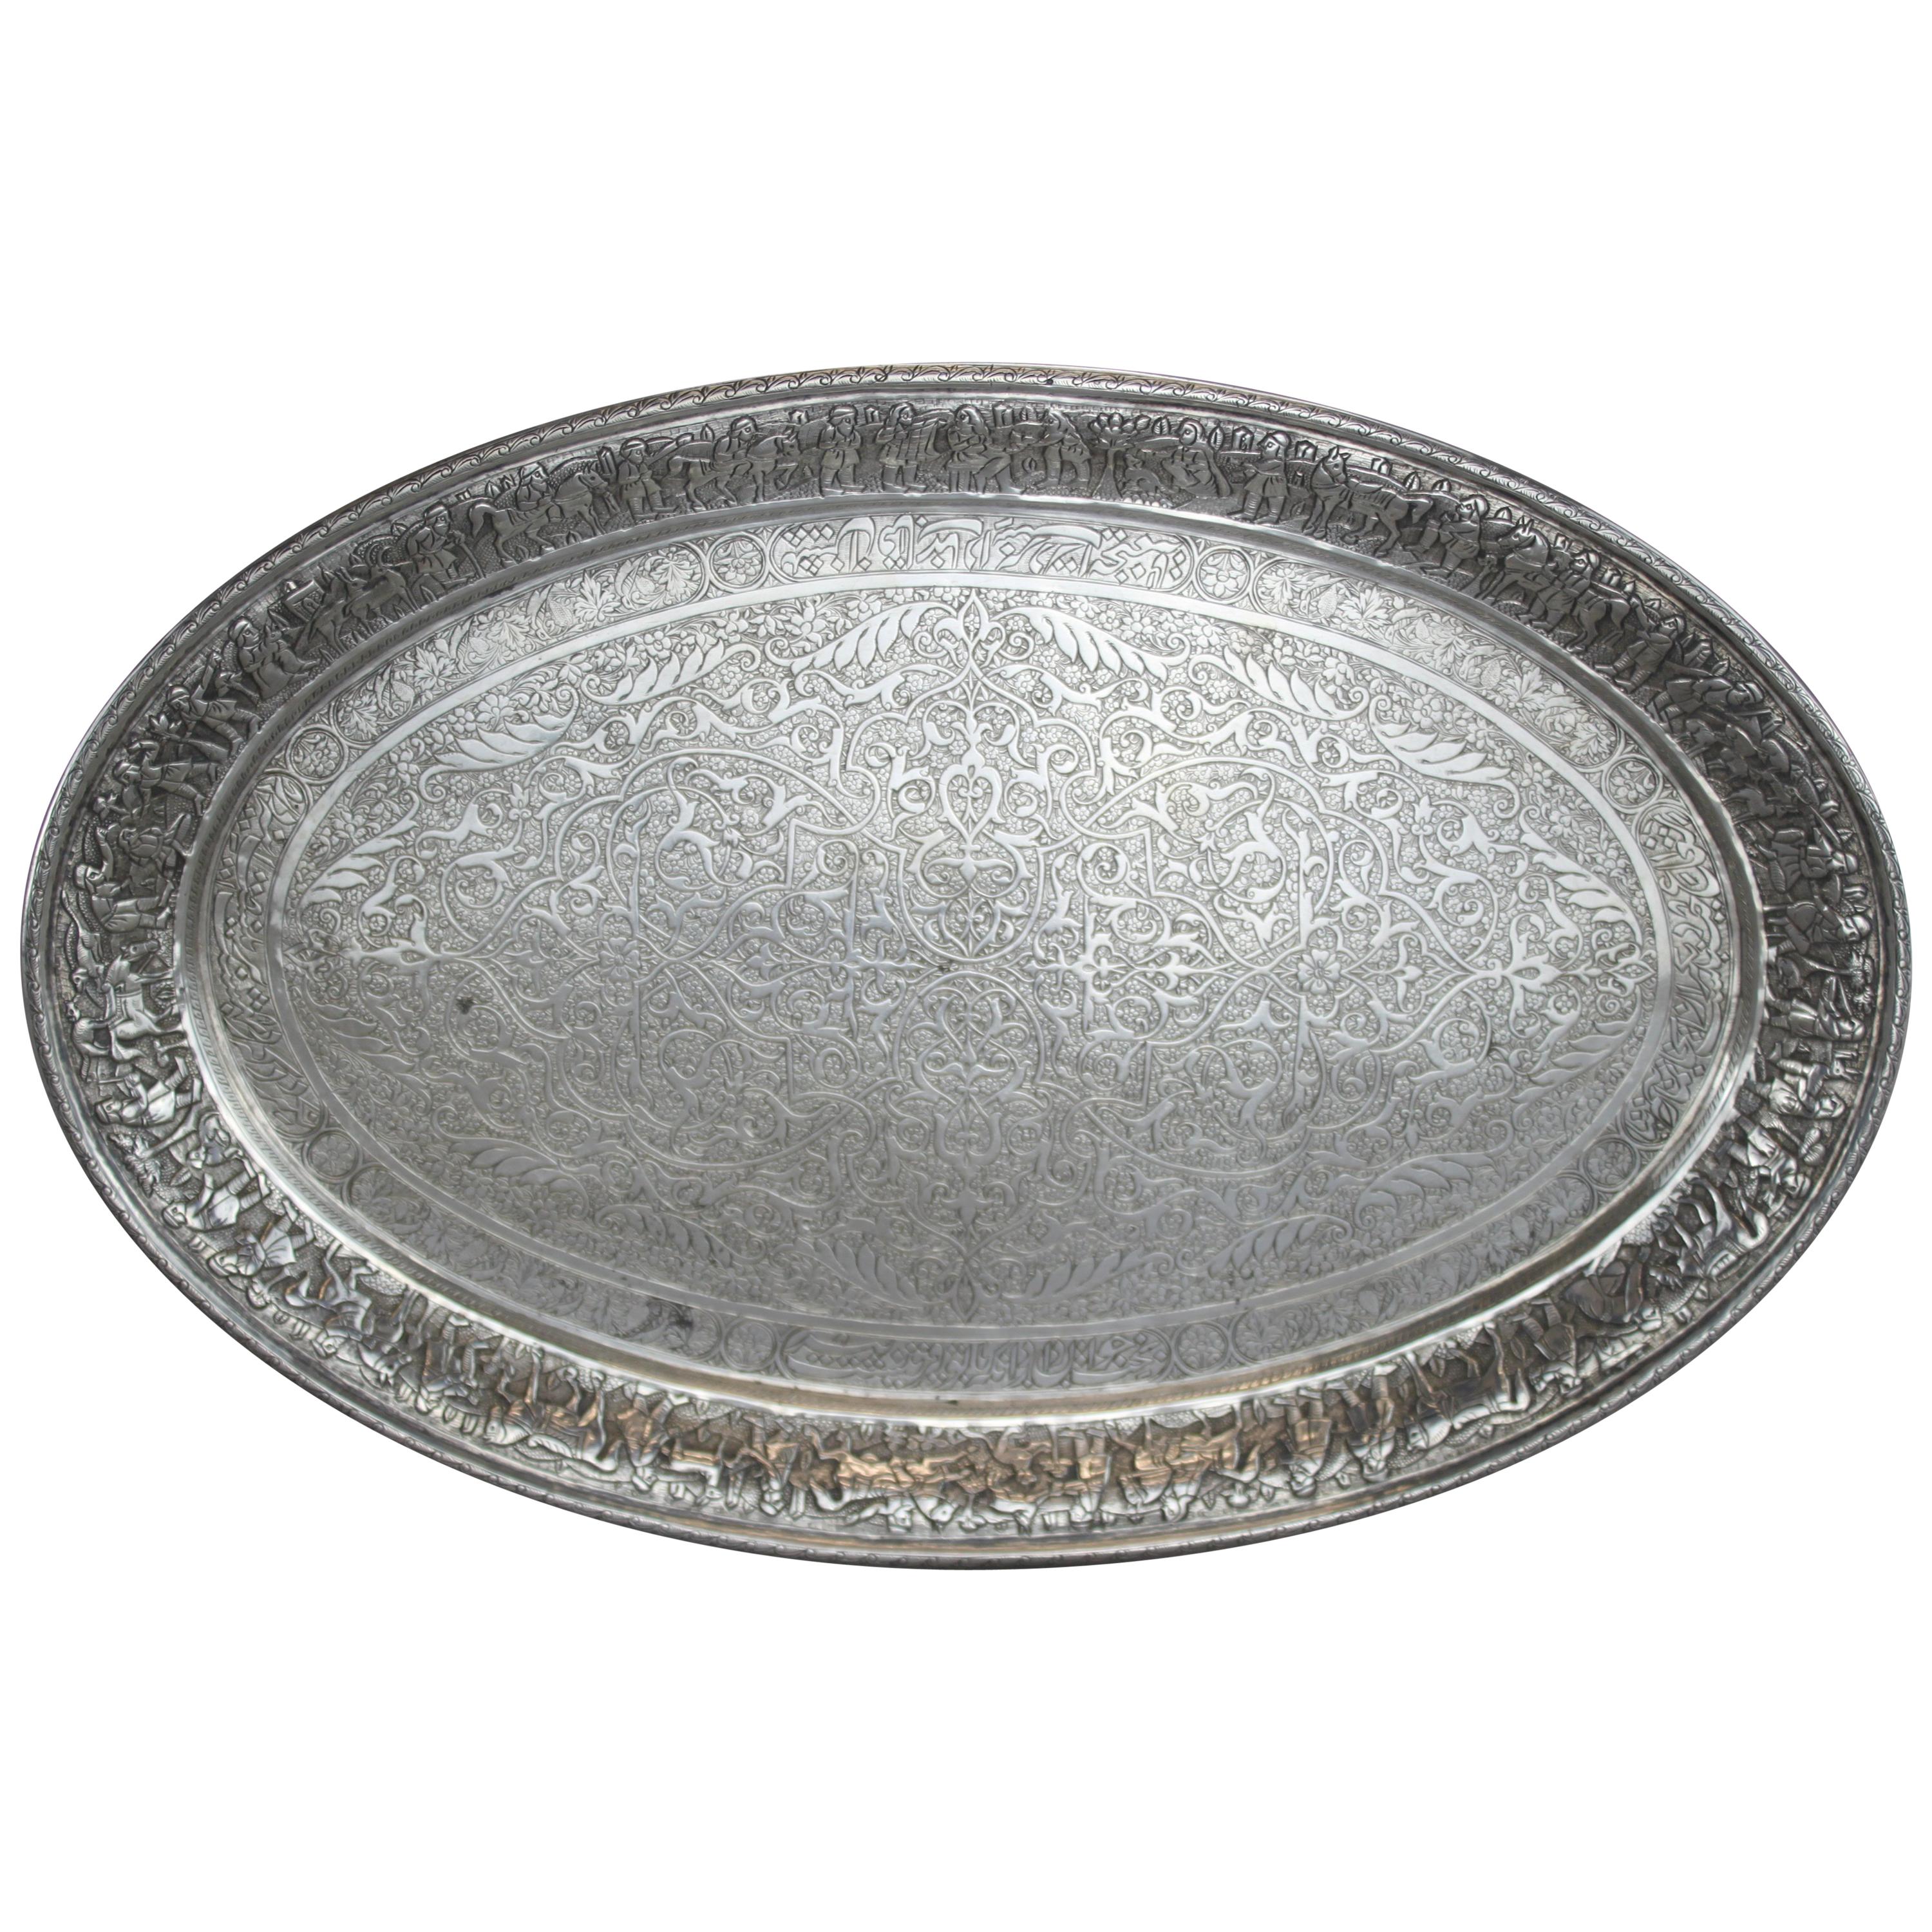 Antique Persian / Islamic Silver Tray, 19th Century